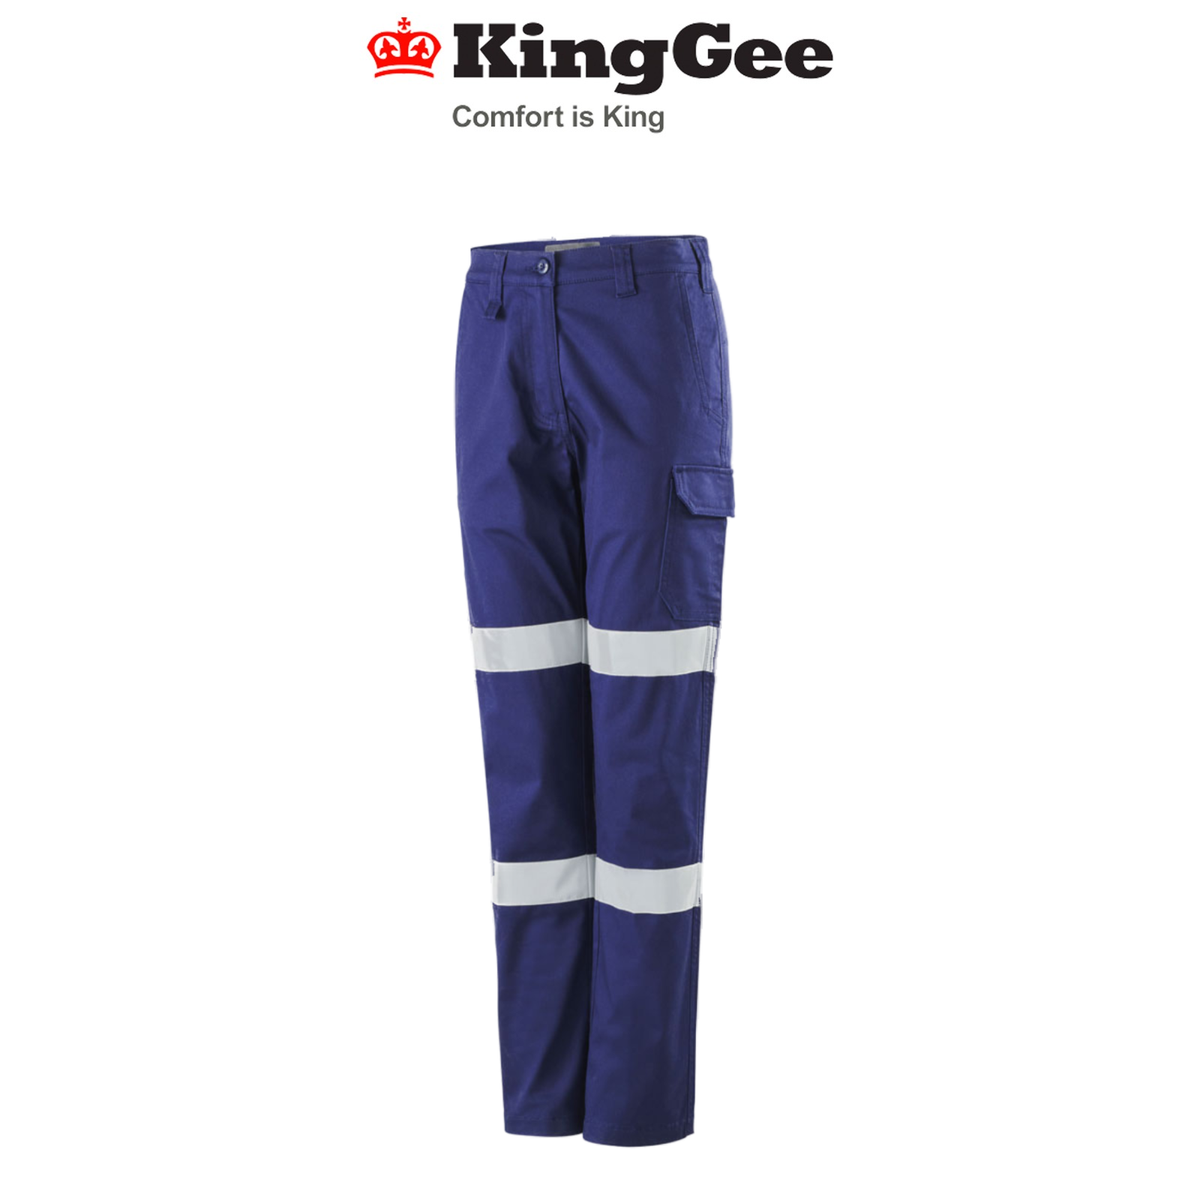 KingGee Womens Stretch Bio Motion Pant Reflective Safety Work Pants Comfy K43010